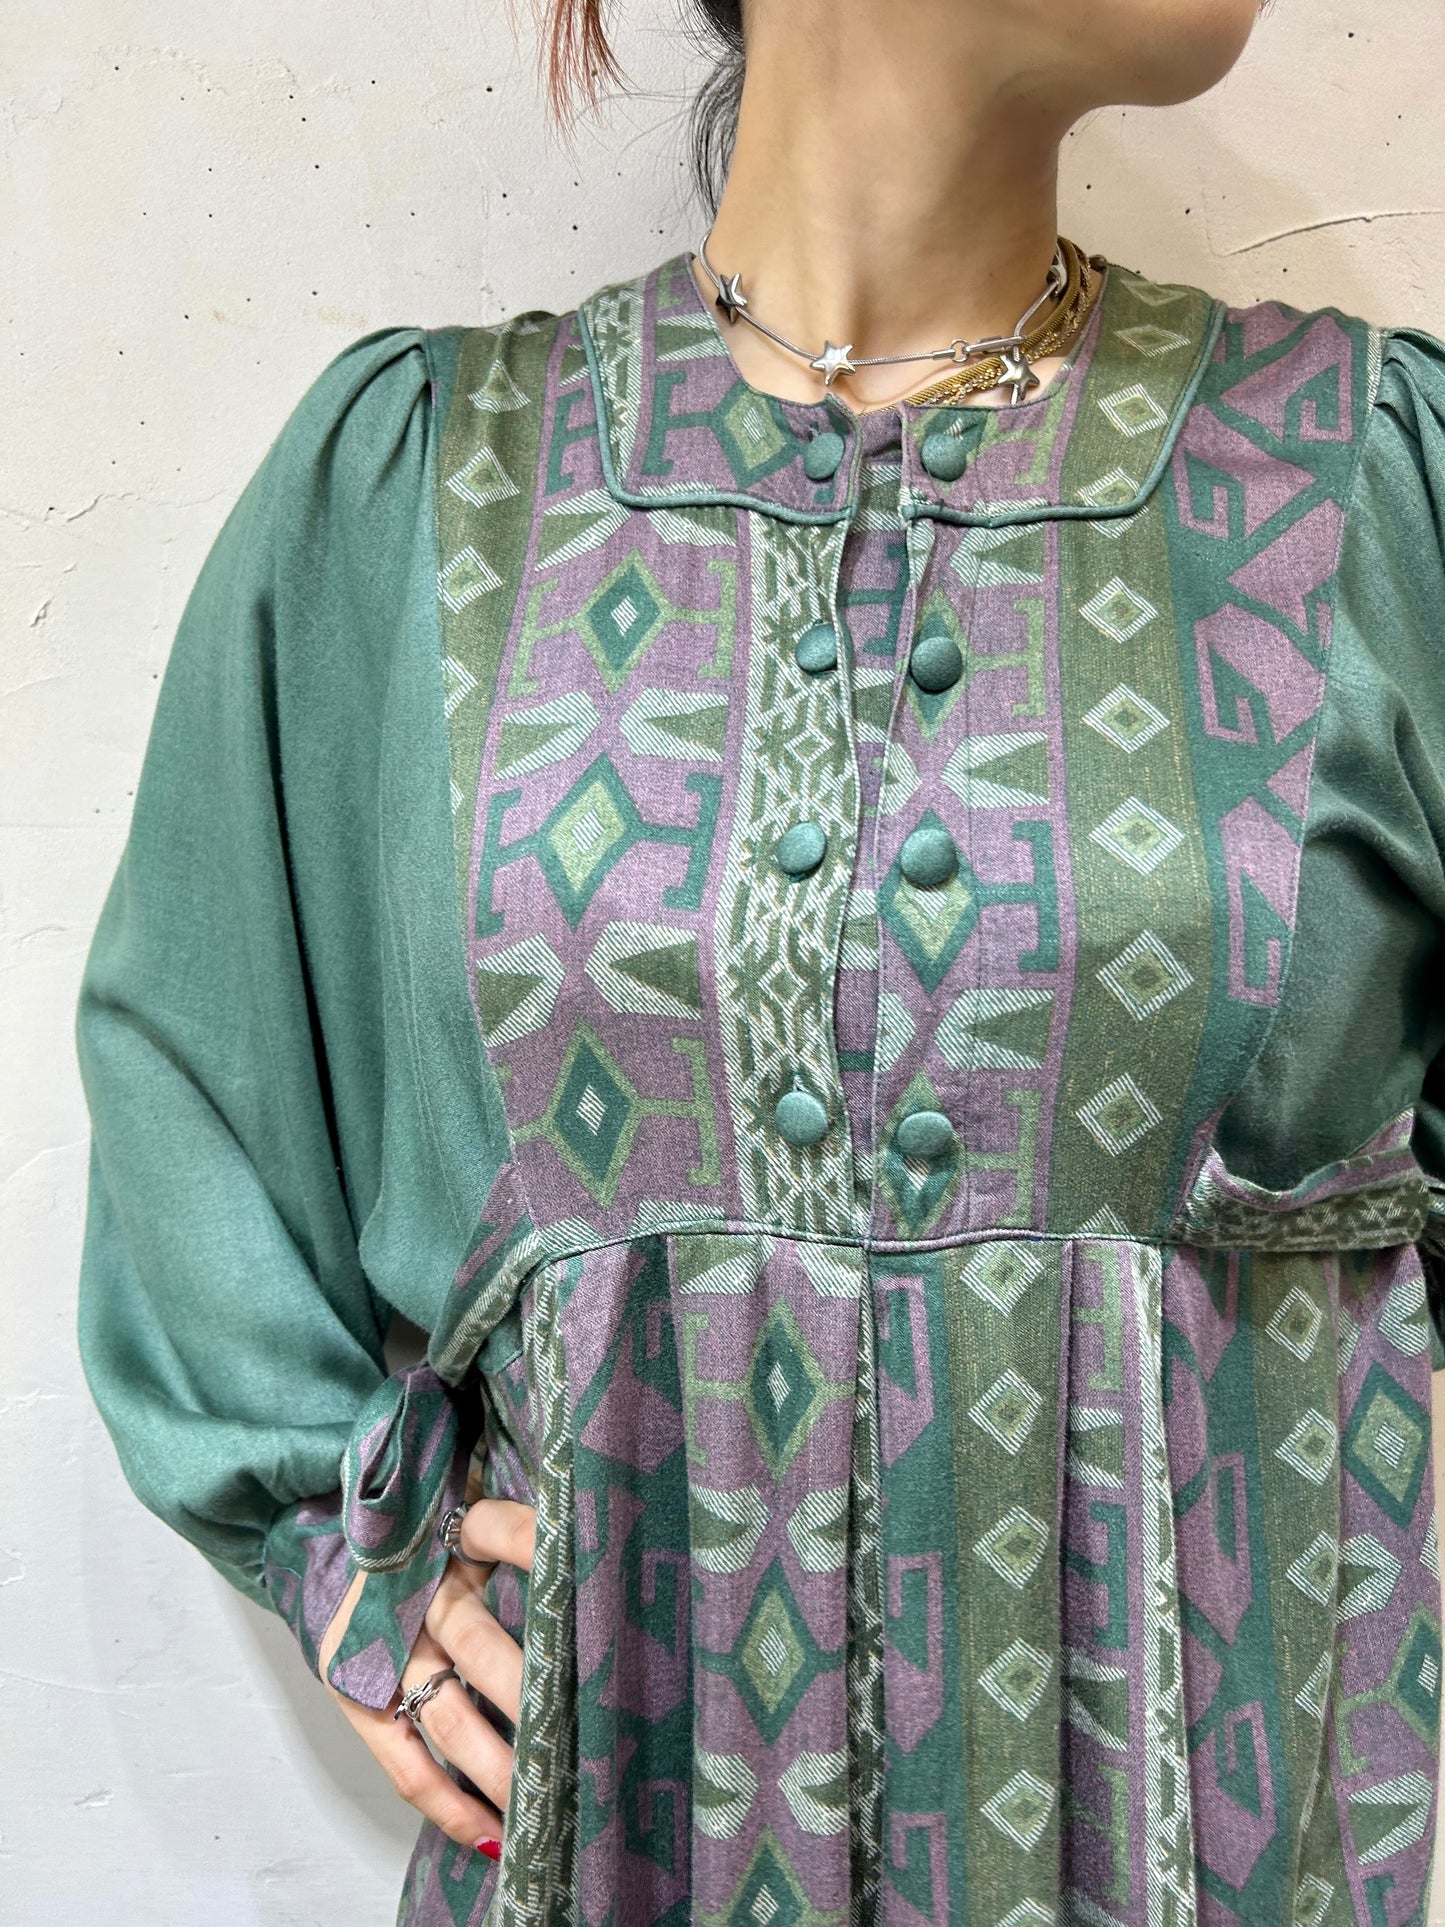 Vinyage Native Dress [H24810]